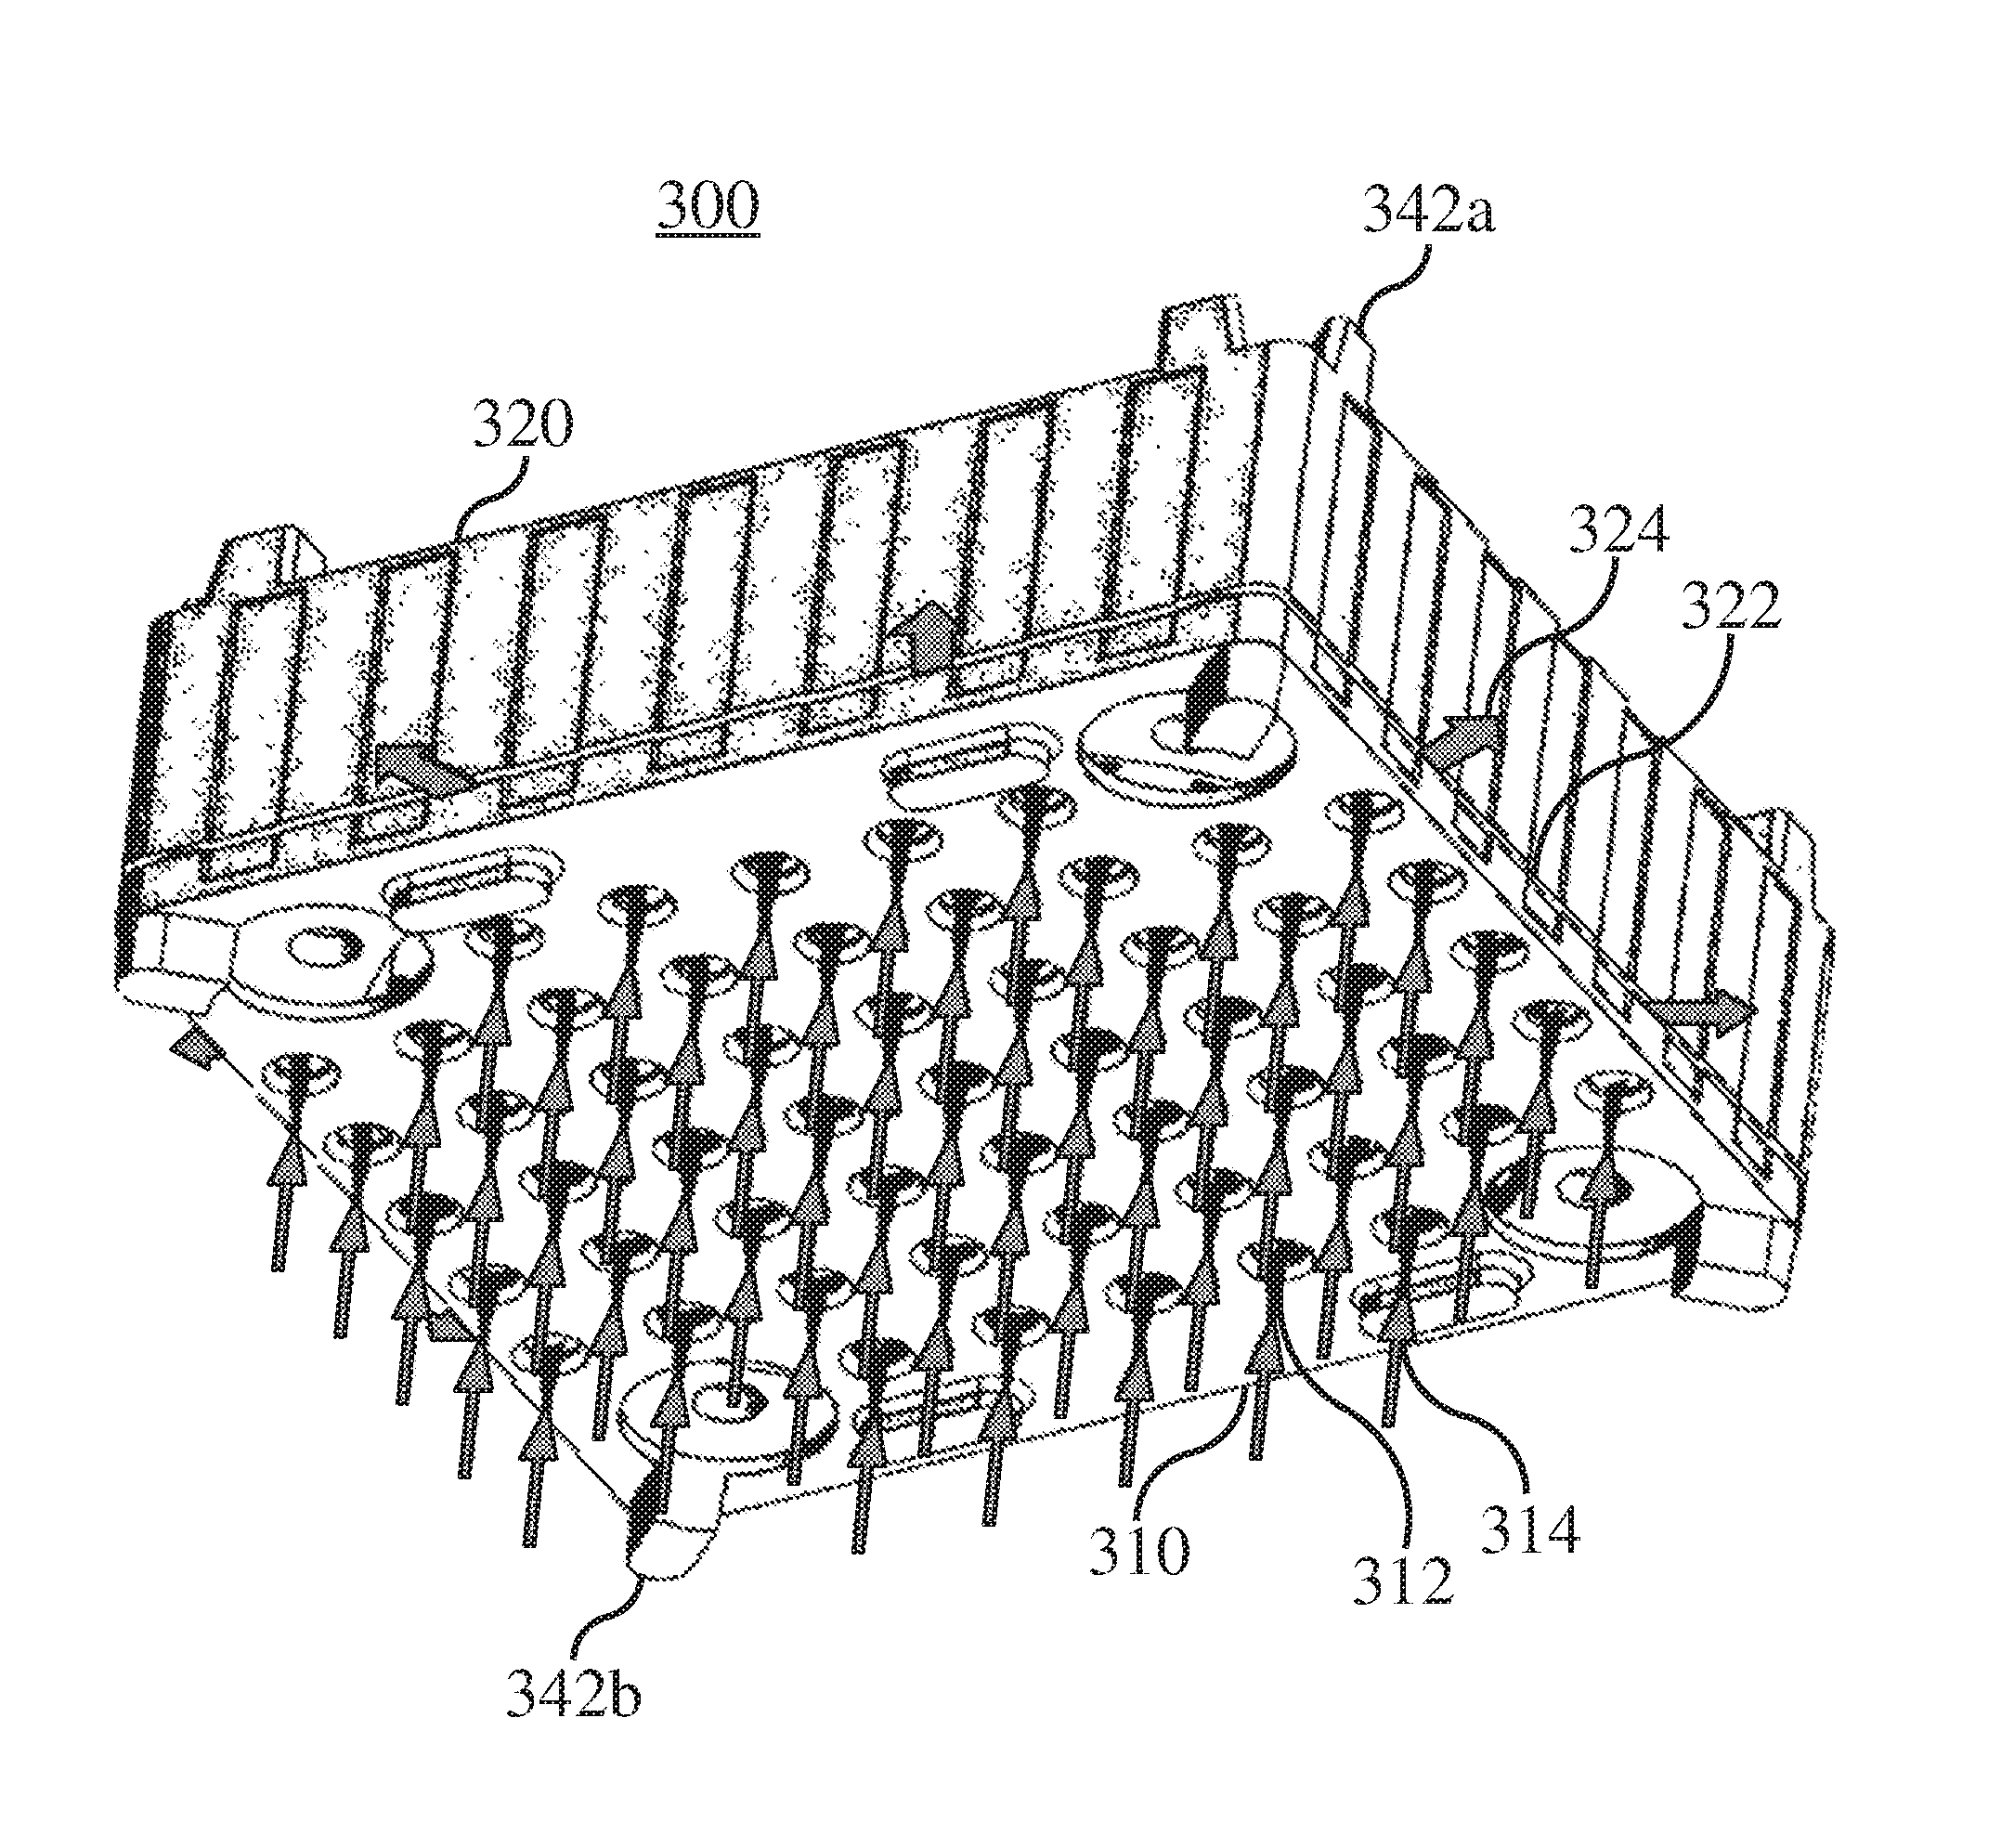 Seabed coupling plate for an ocean bottom seismic node